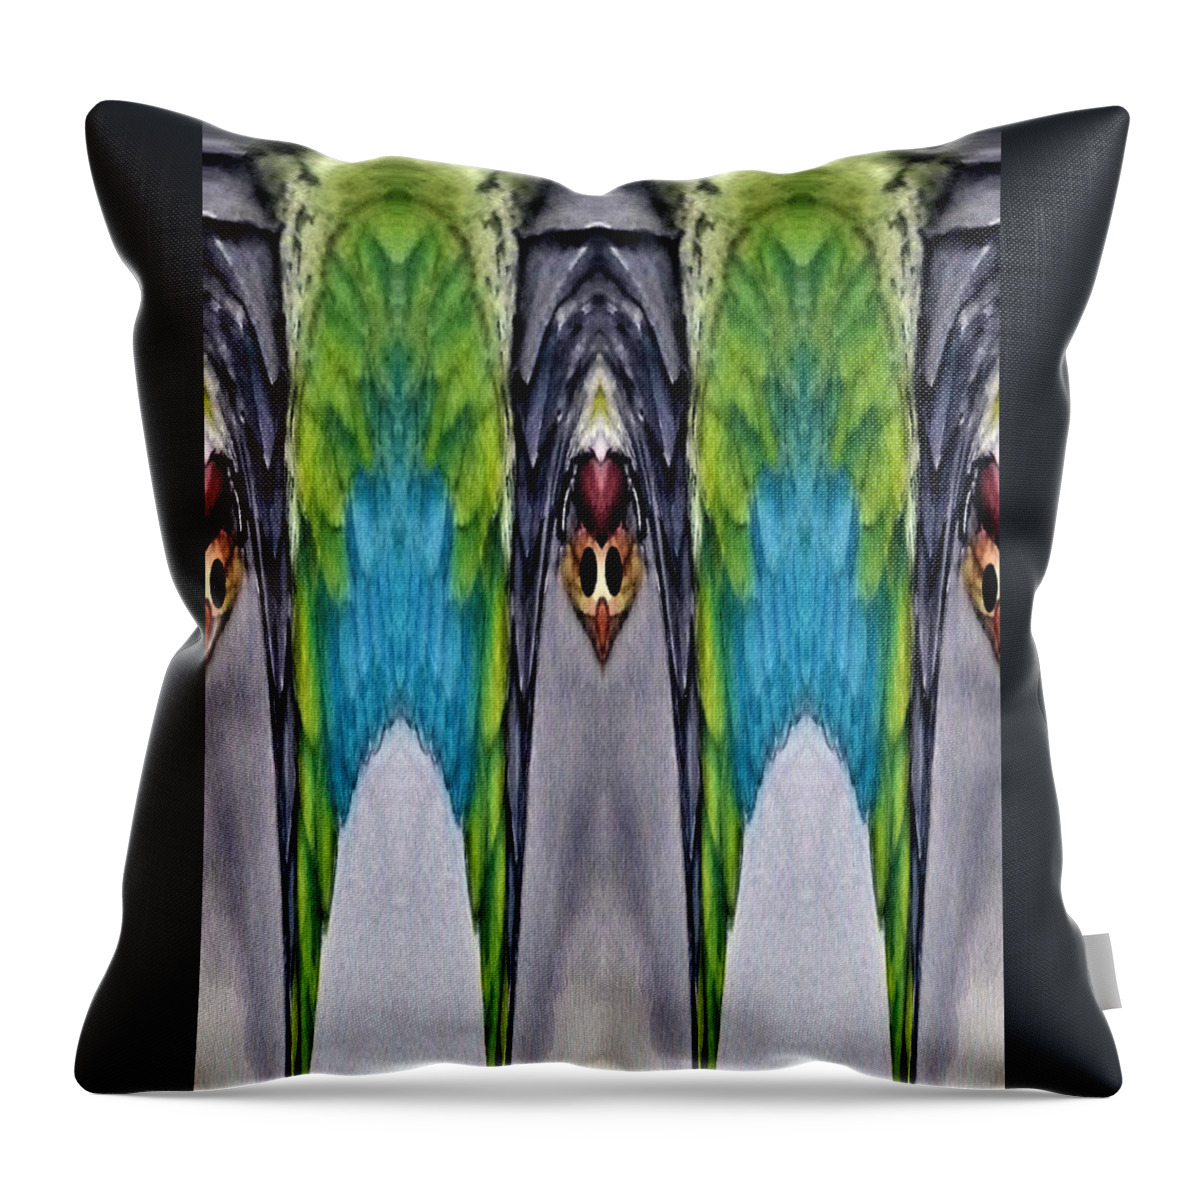 Abstract Art Throw Pillow featuring the digital art Hanging Bats by Ronald Mills